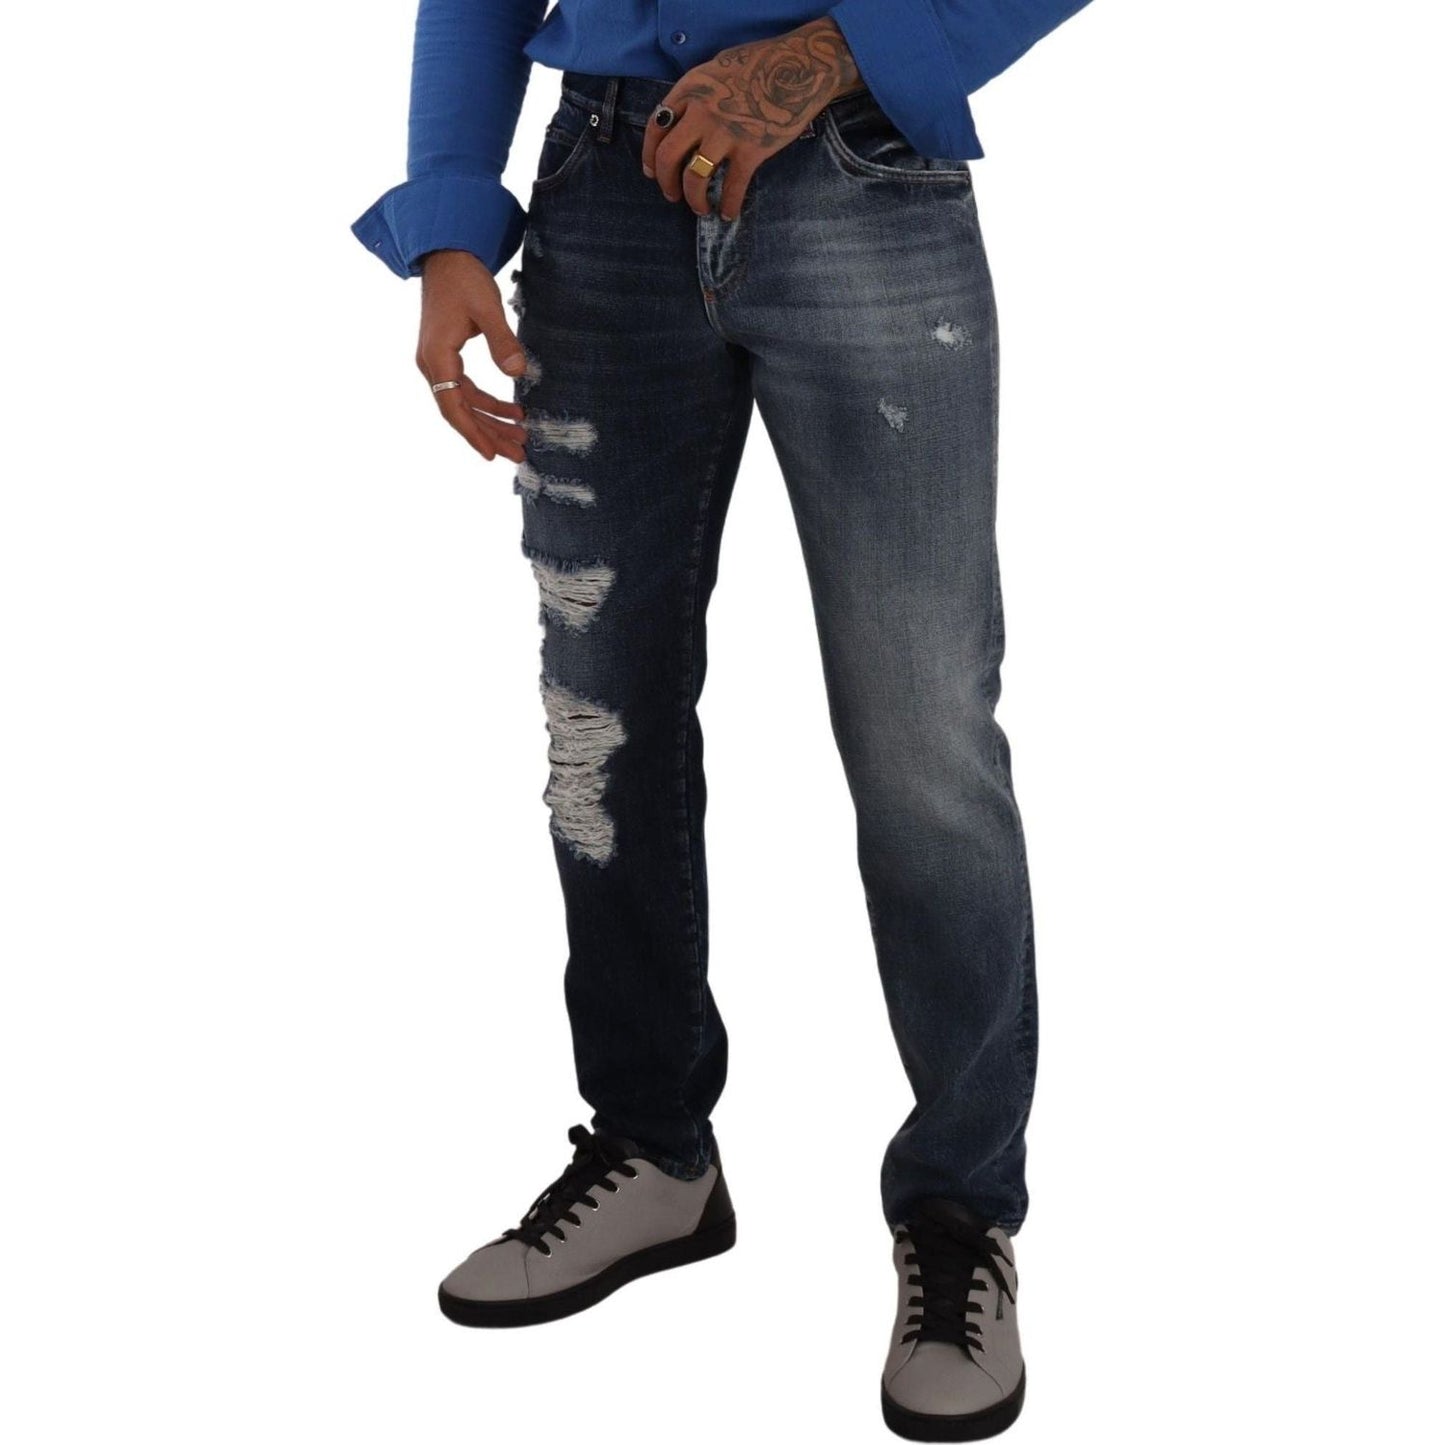 Dolce & Gabbana Chic Tattered Denim Jeans blue-cotton-regular-denim-trousers-jeans IMG_7048-645818f7-cd4.jpg